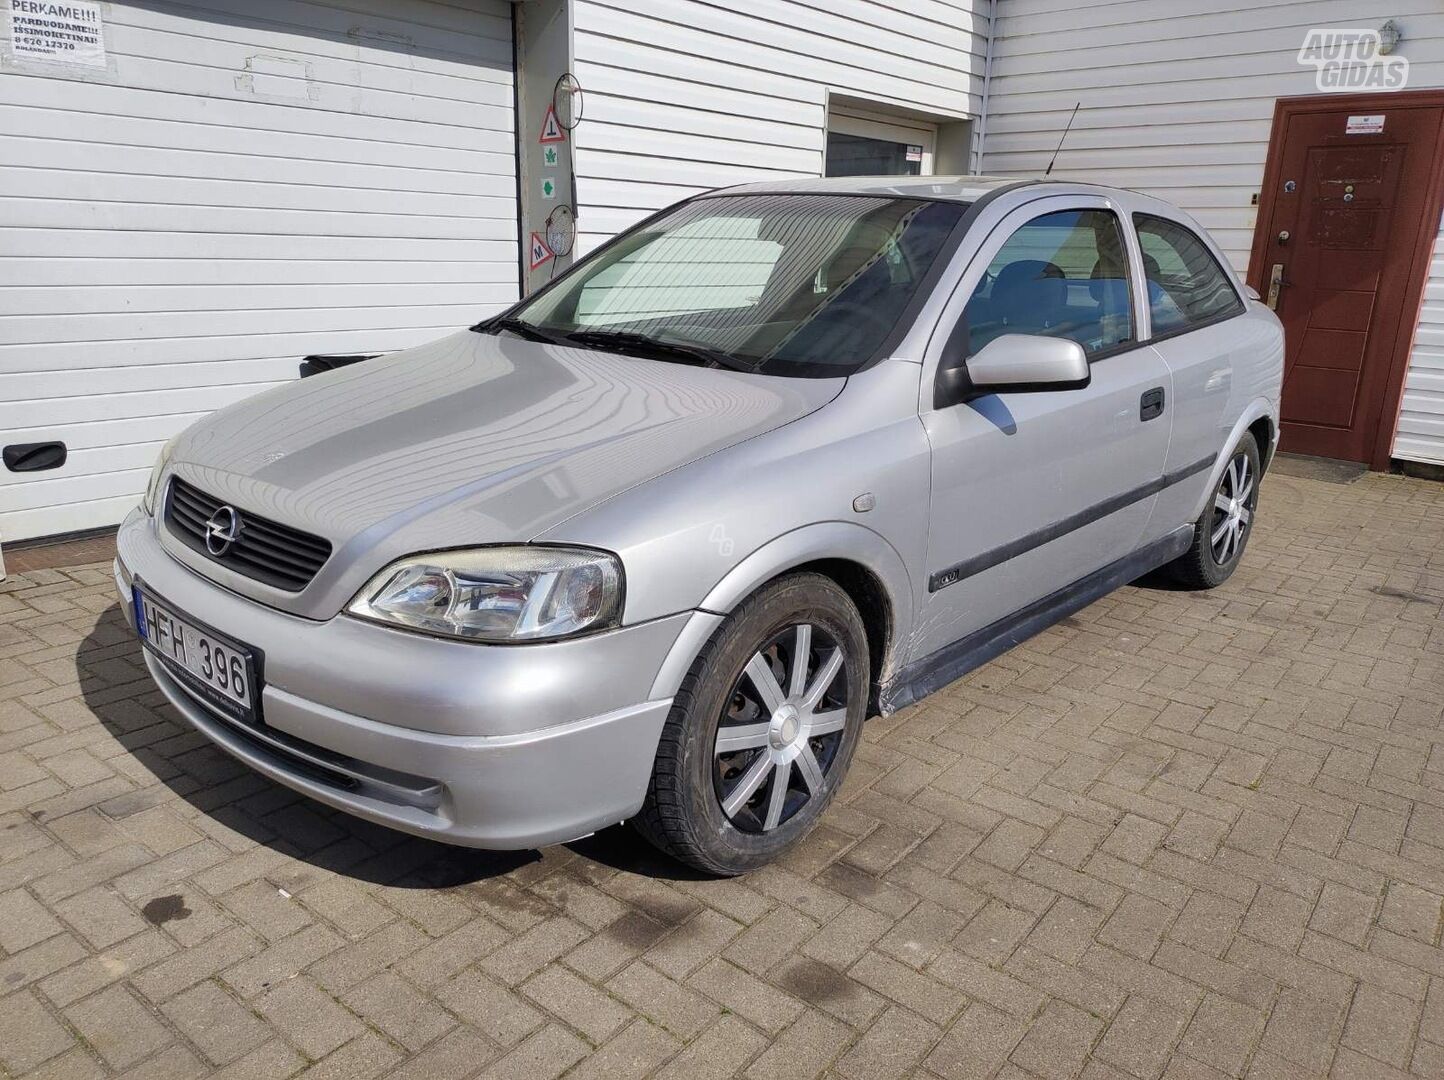 Opel Astra II DTI 2000 m